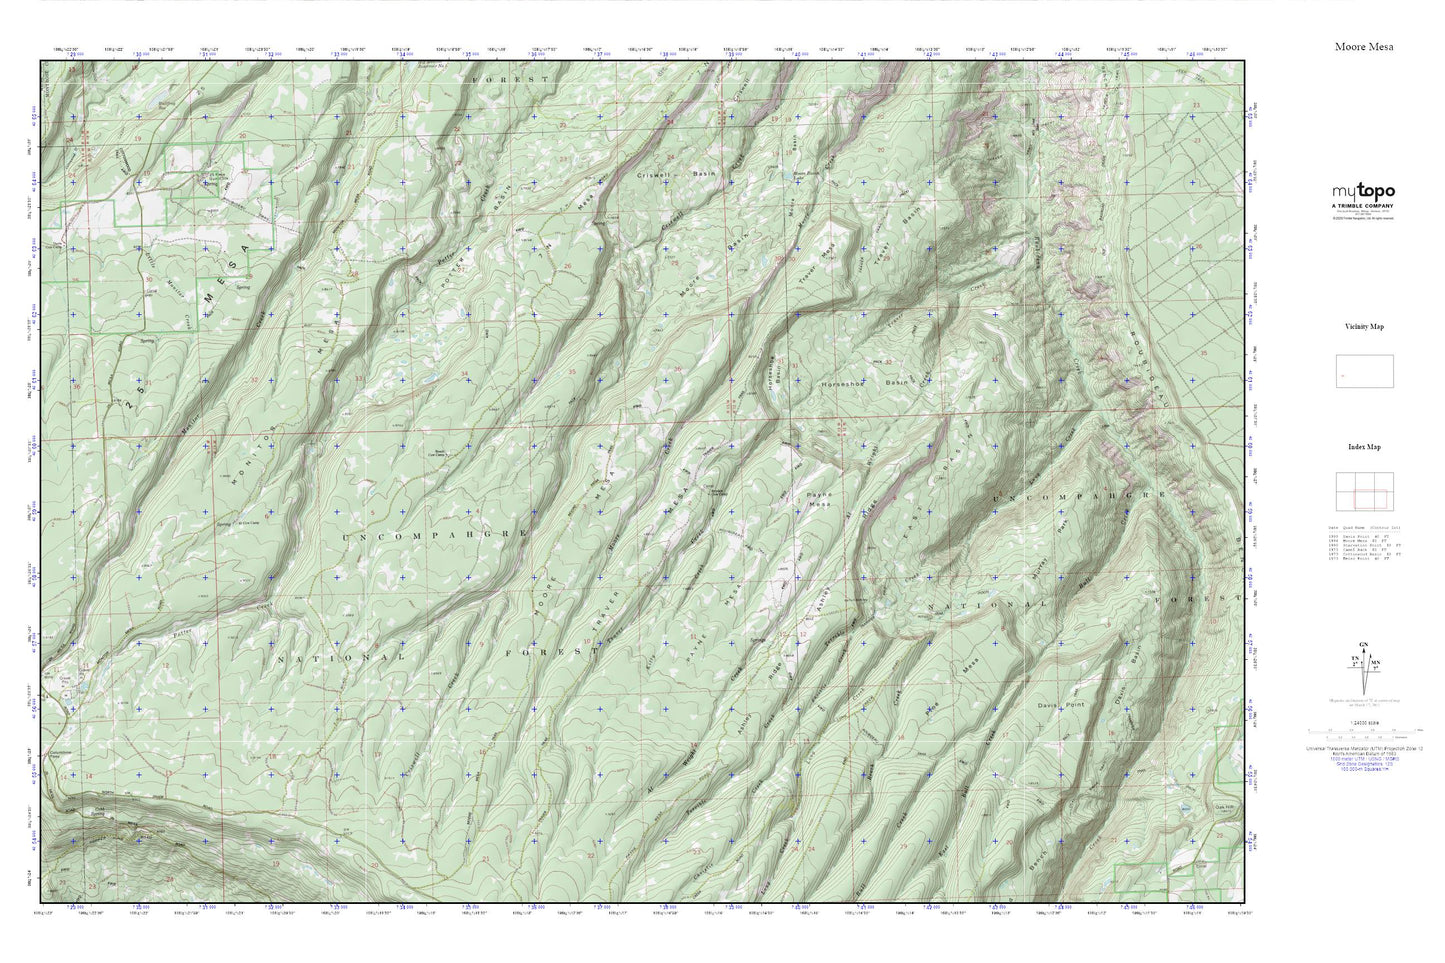 Moore Mesa MyTopo Explorer Series Map Image